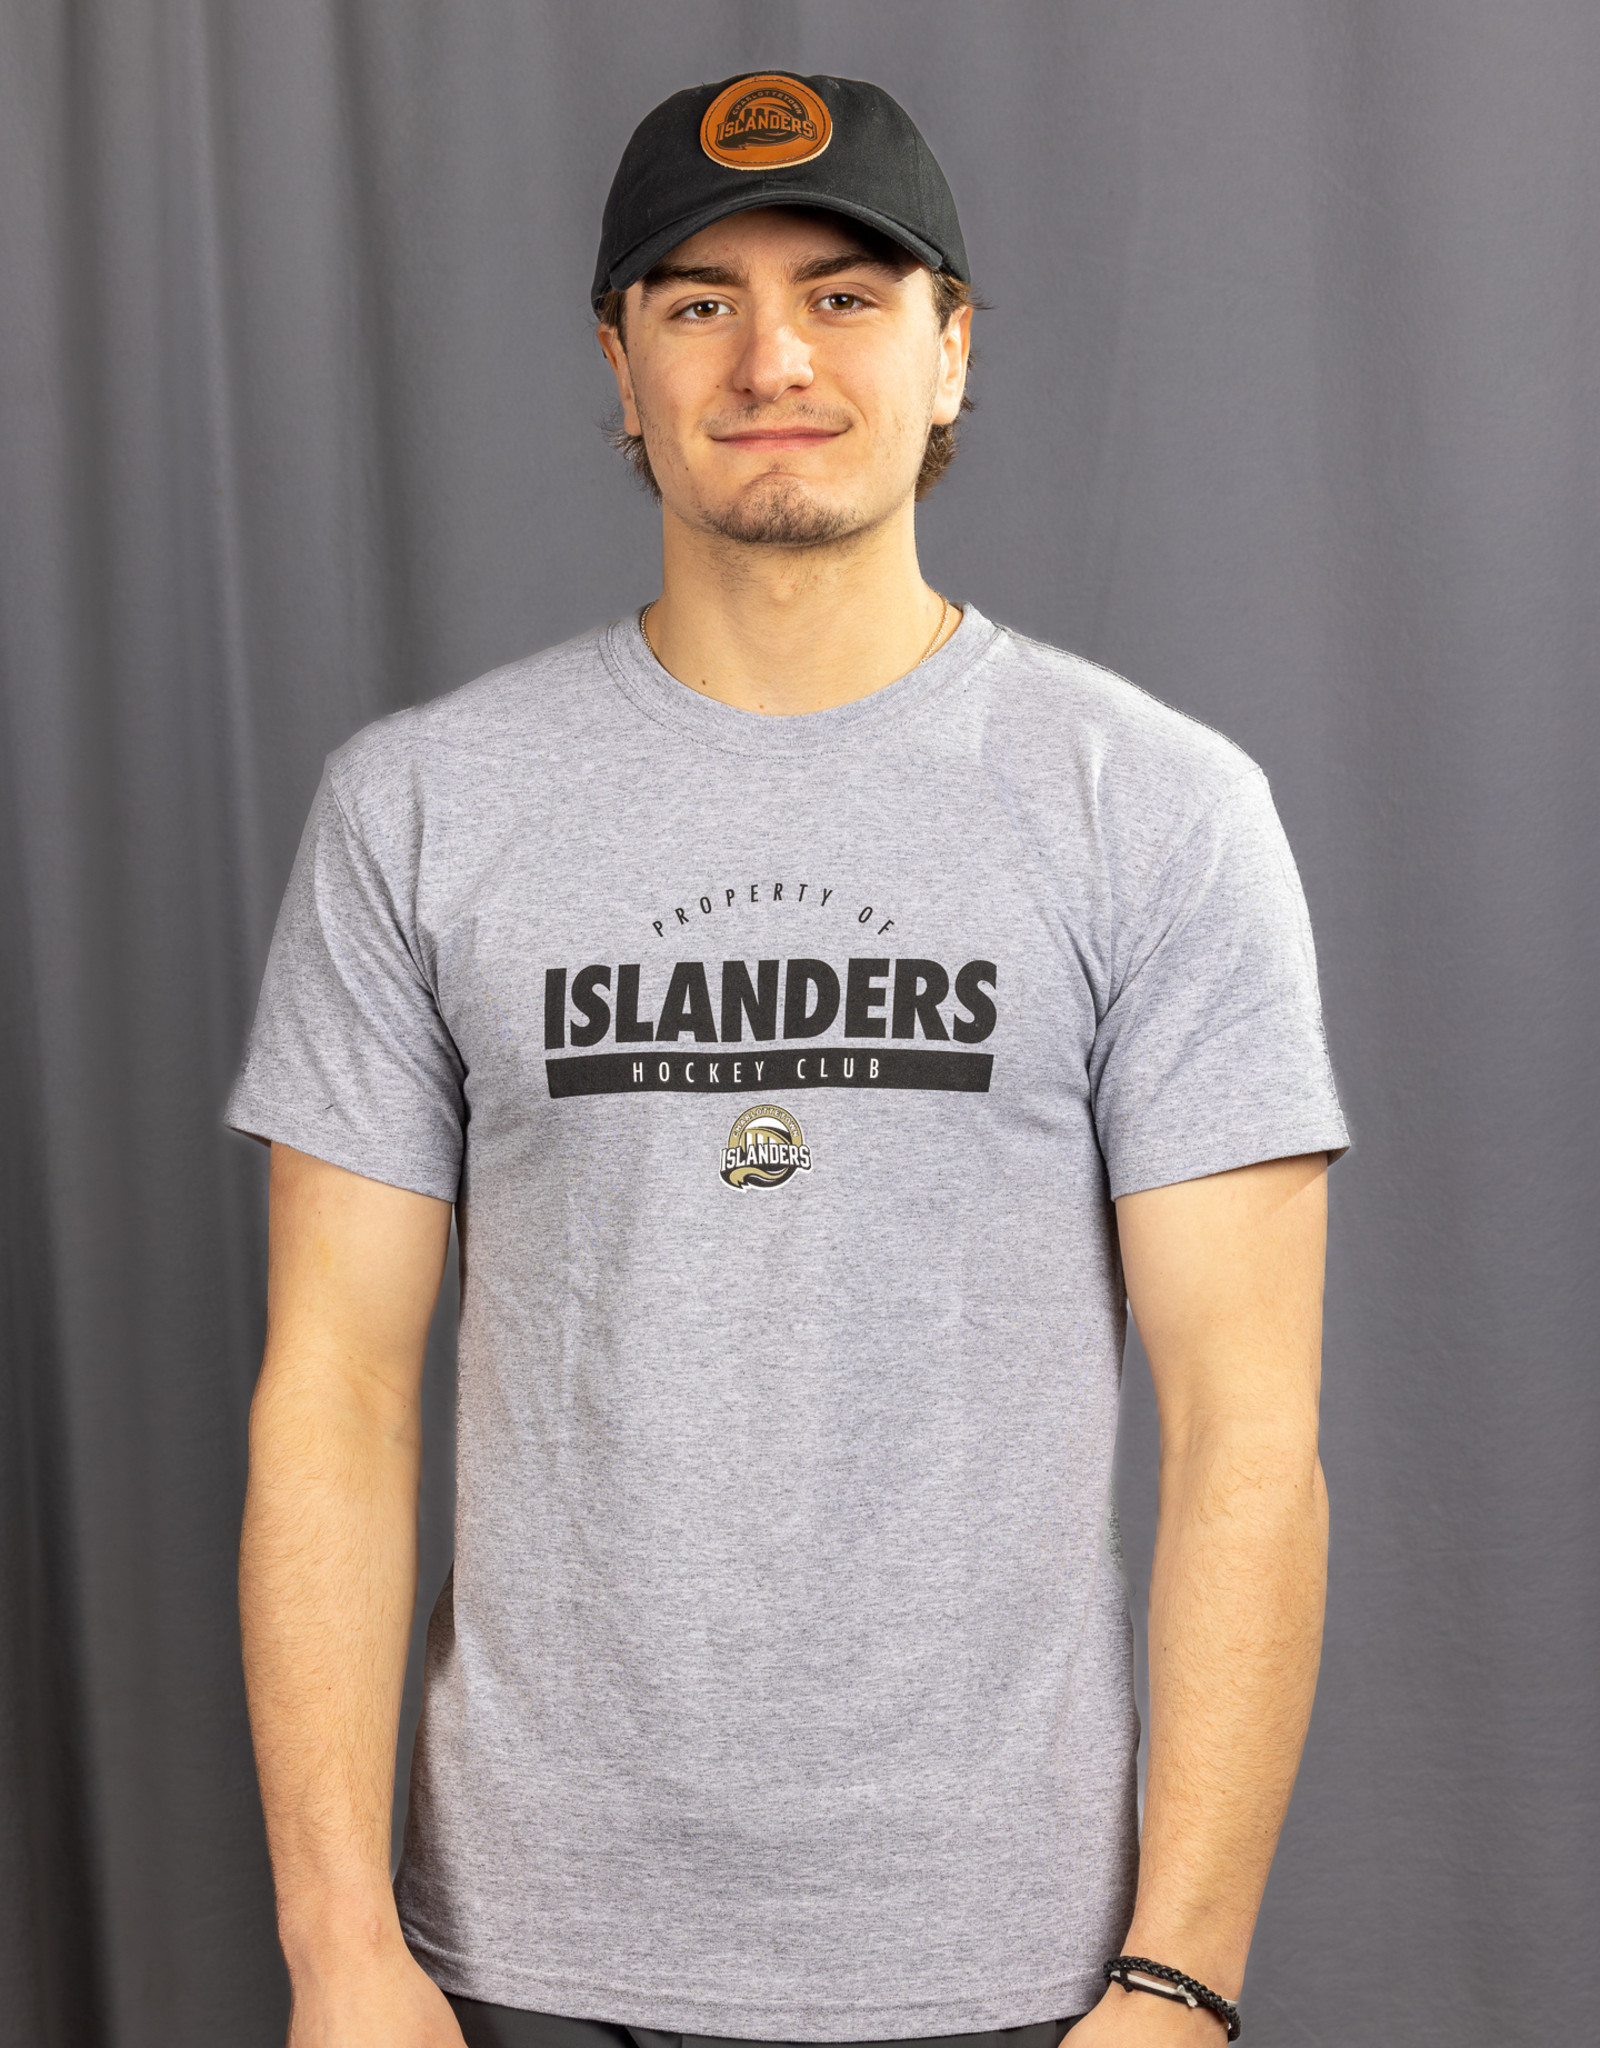 M&O Property of Islanders T-Shirt